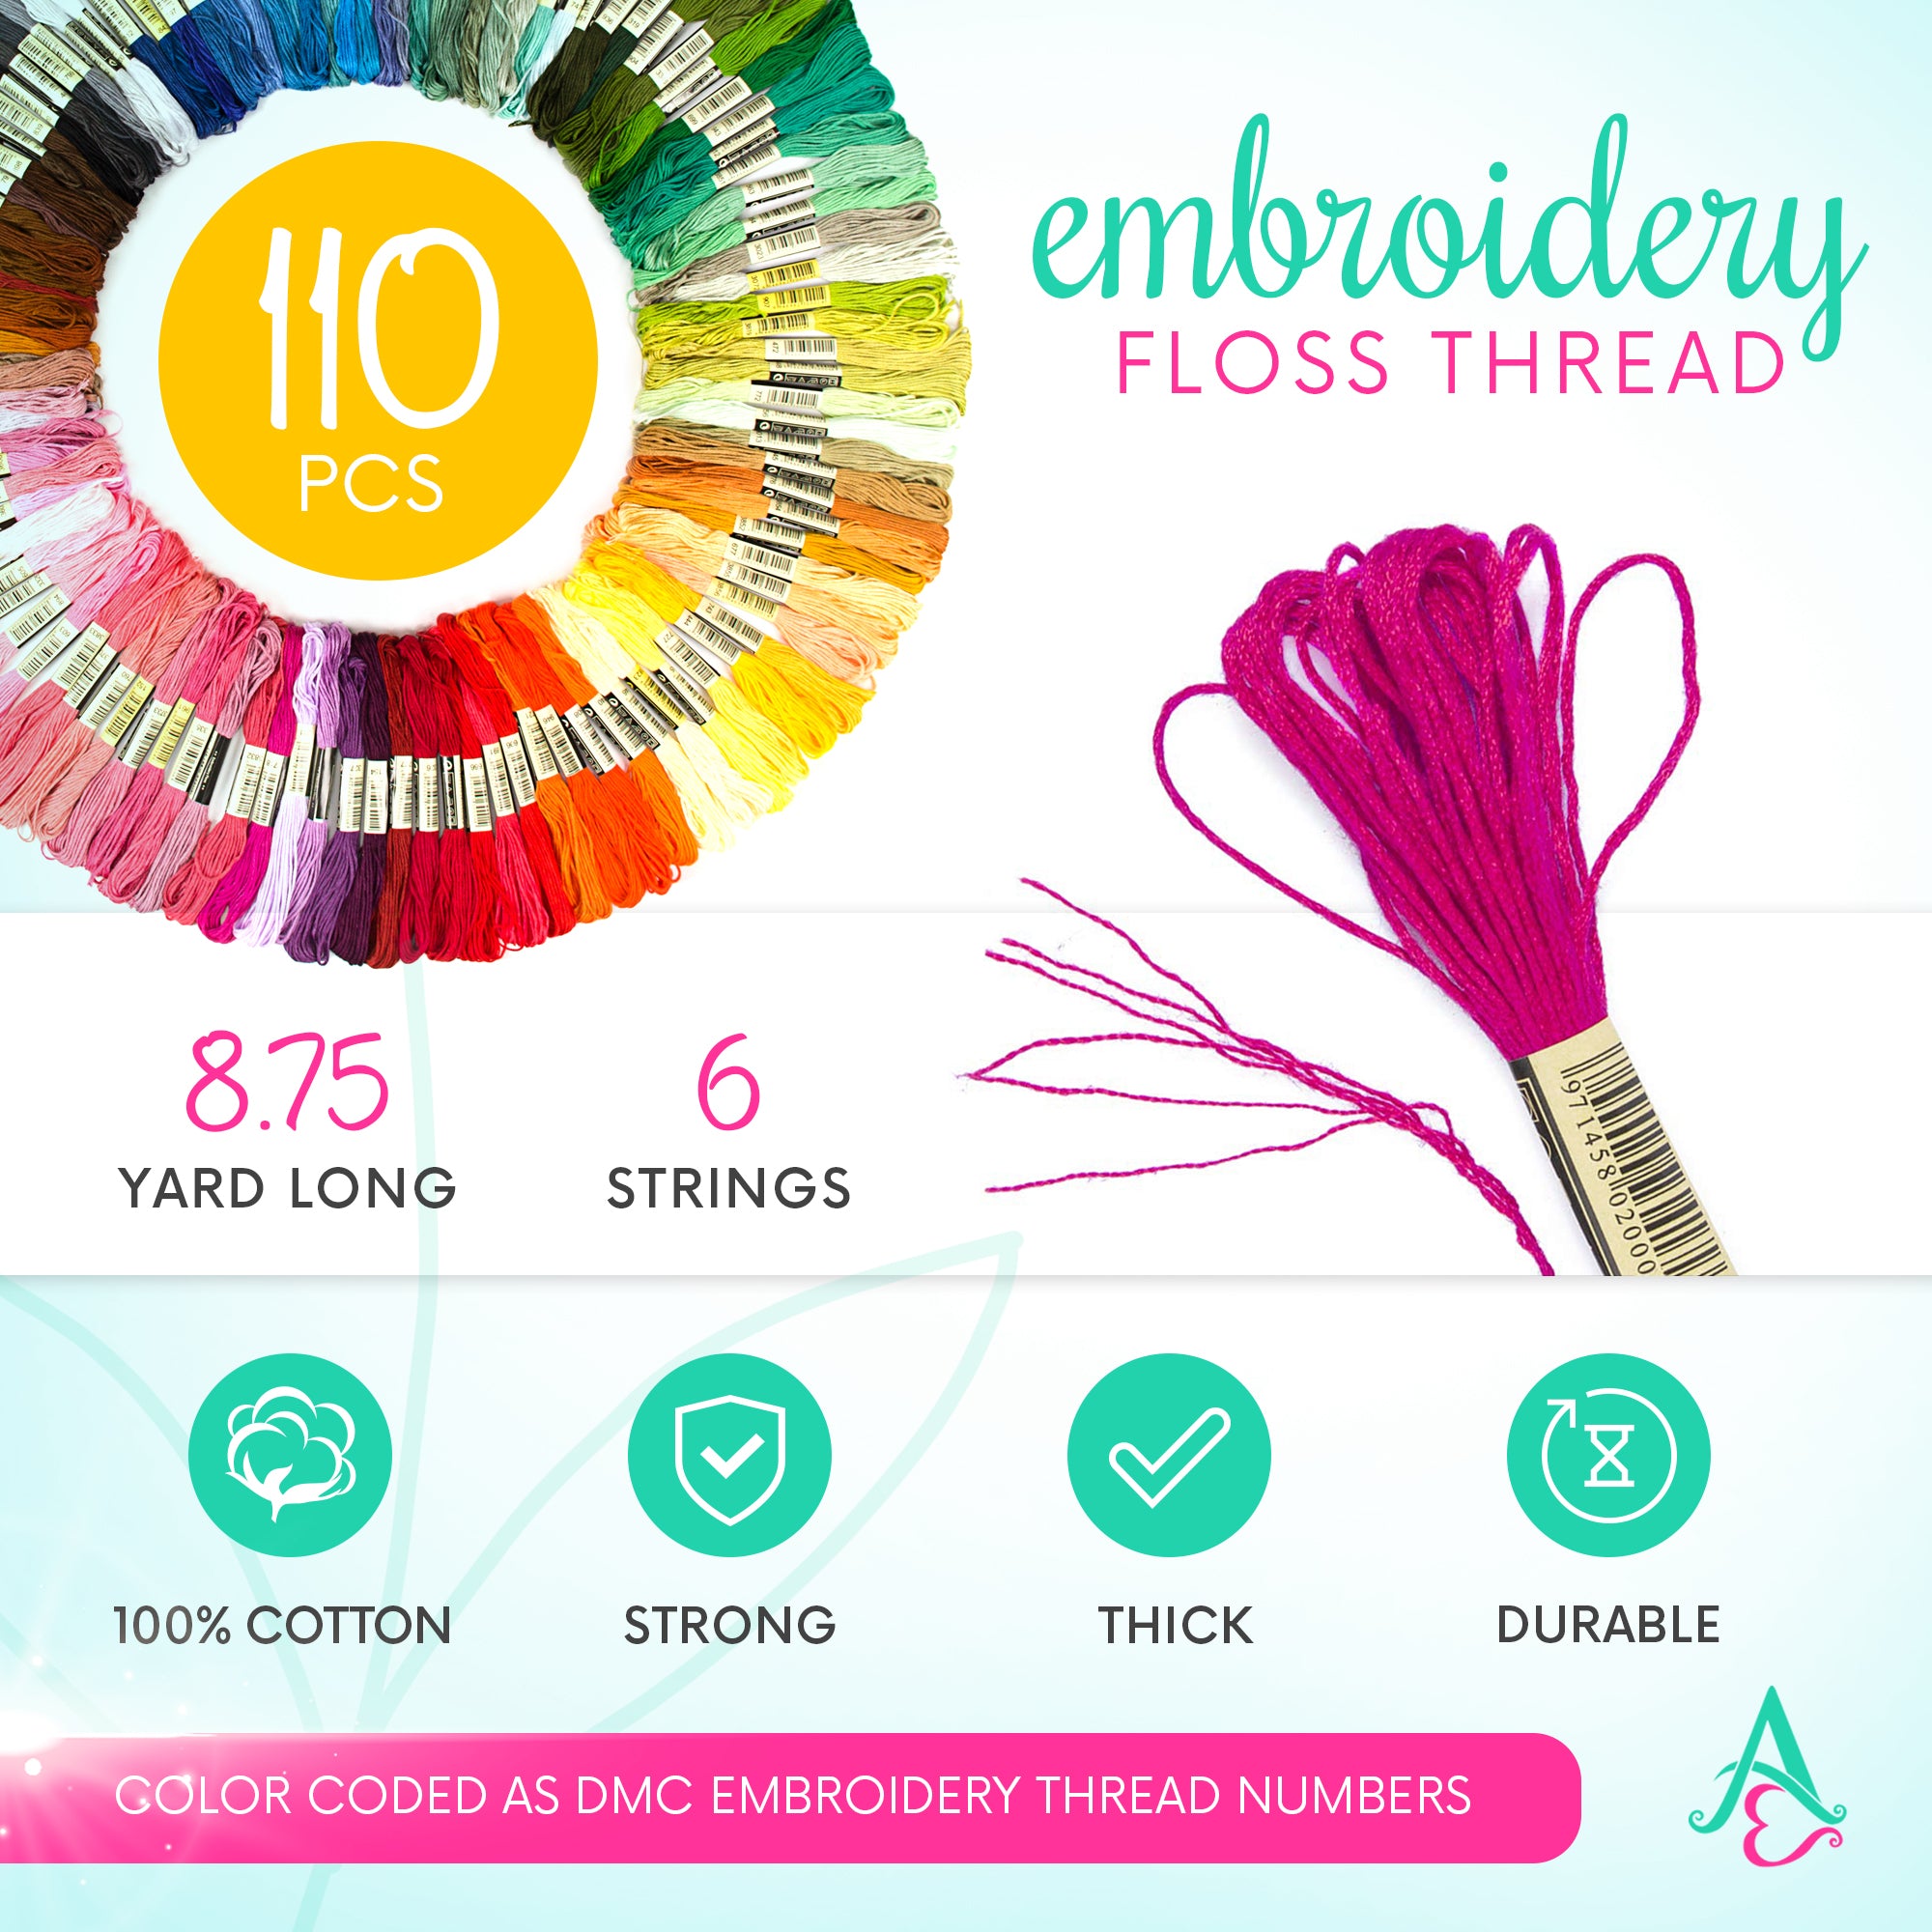  YITOHOP 200pcs+ Embroidery Floss kit, Friendship